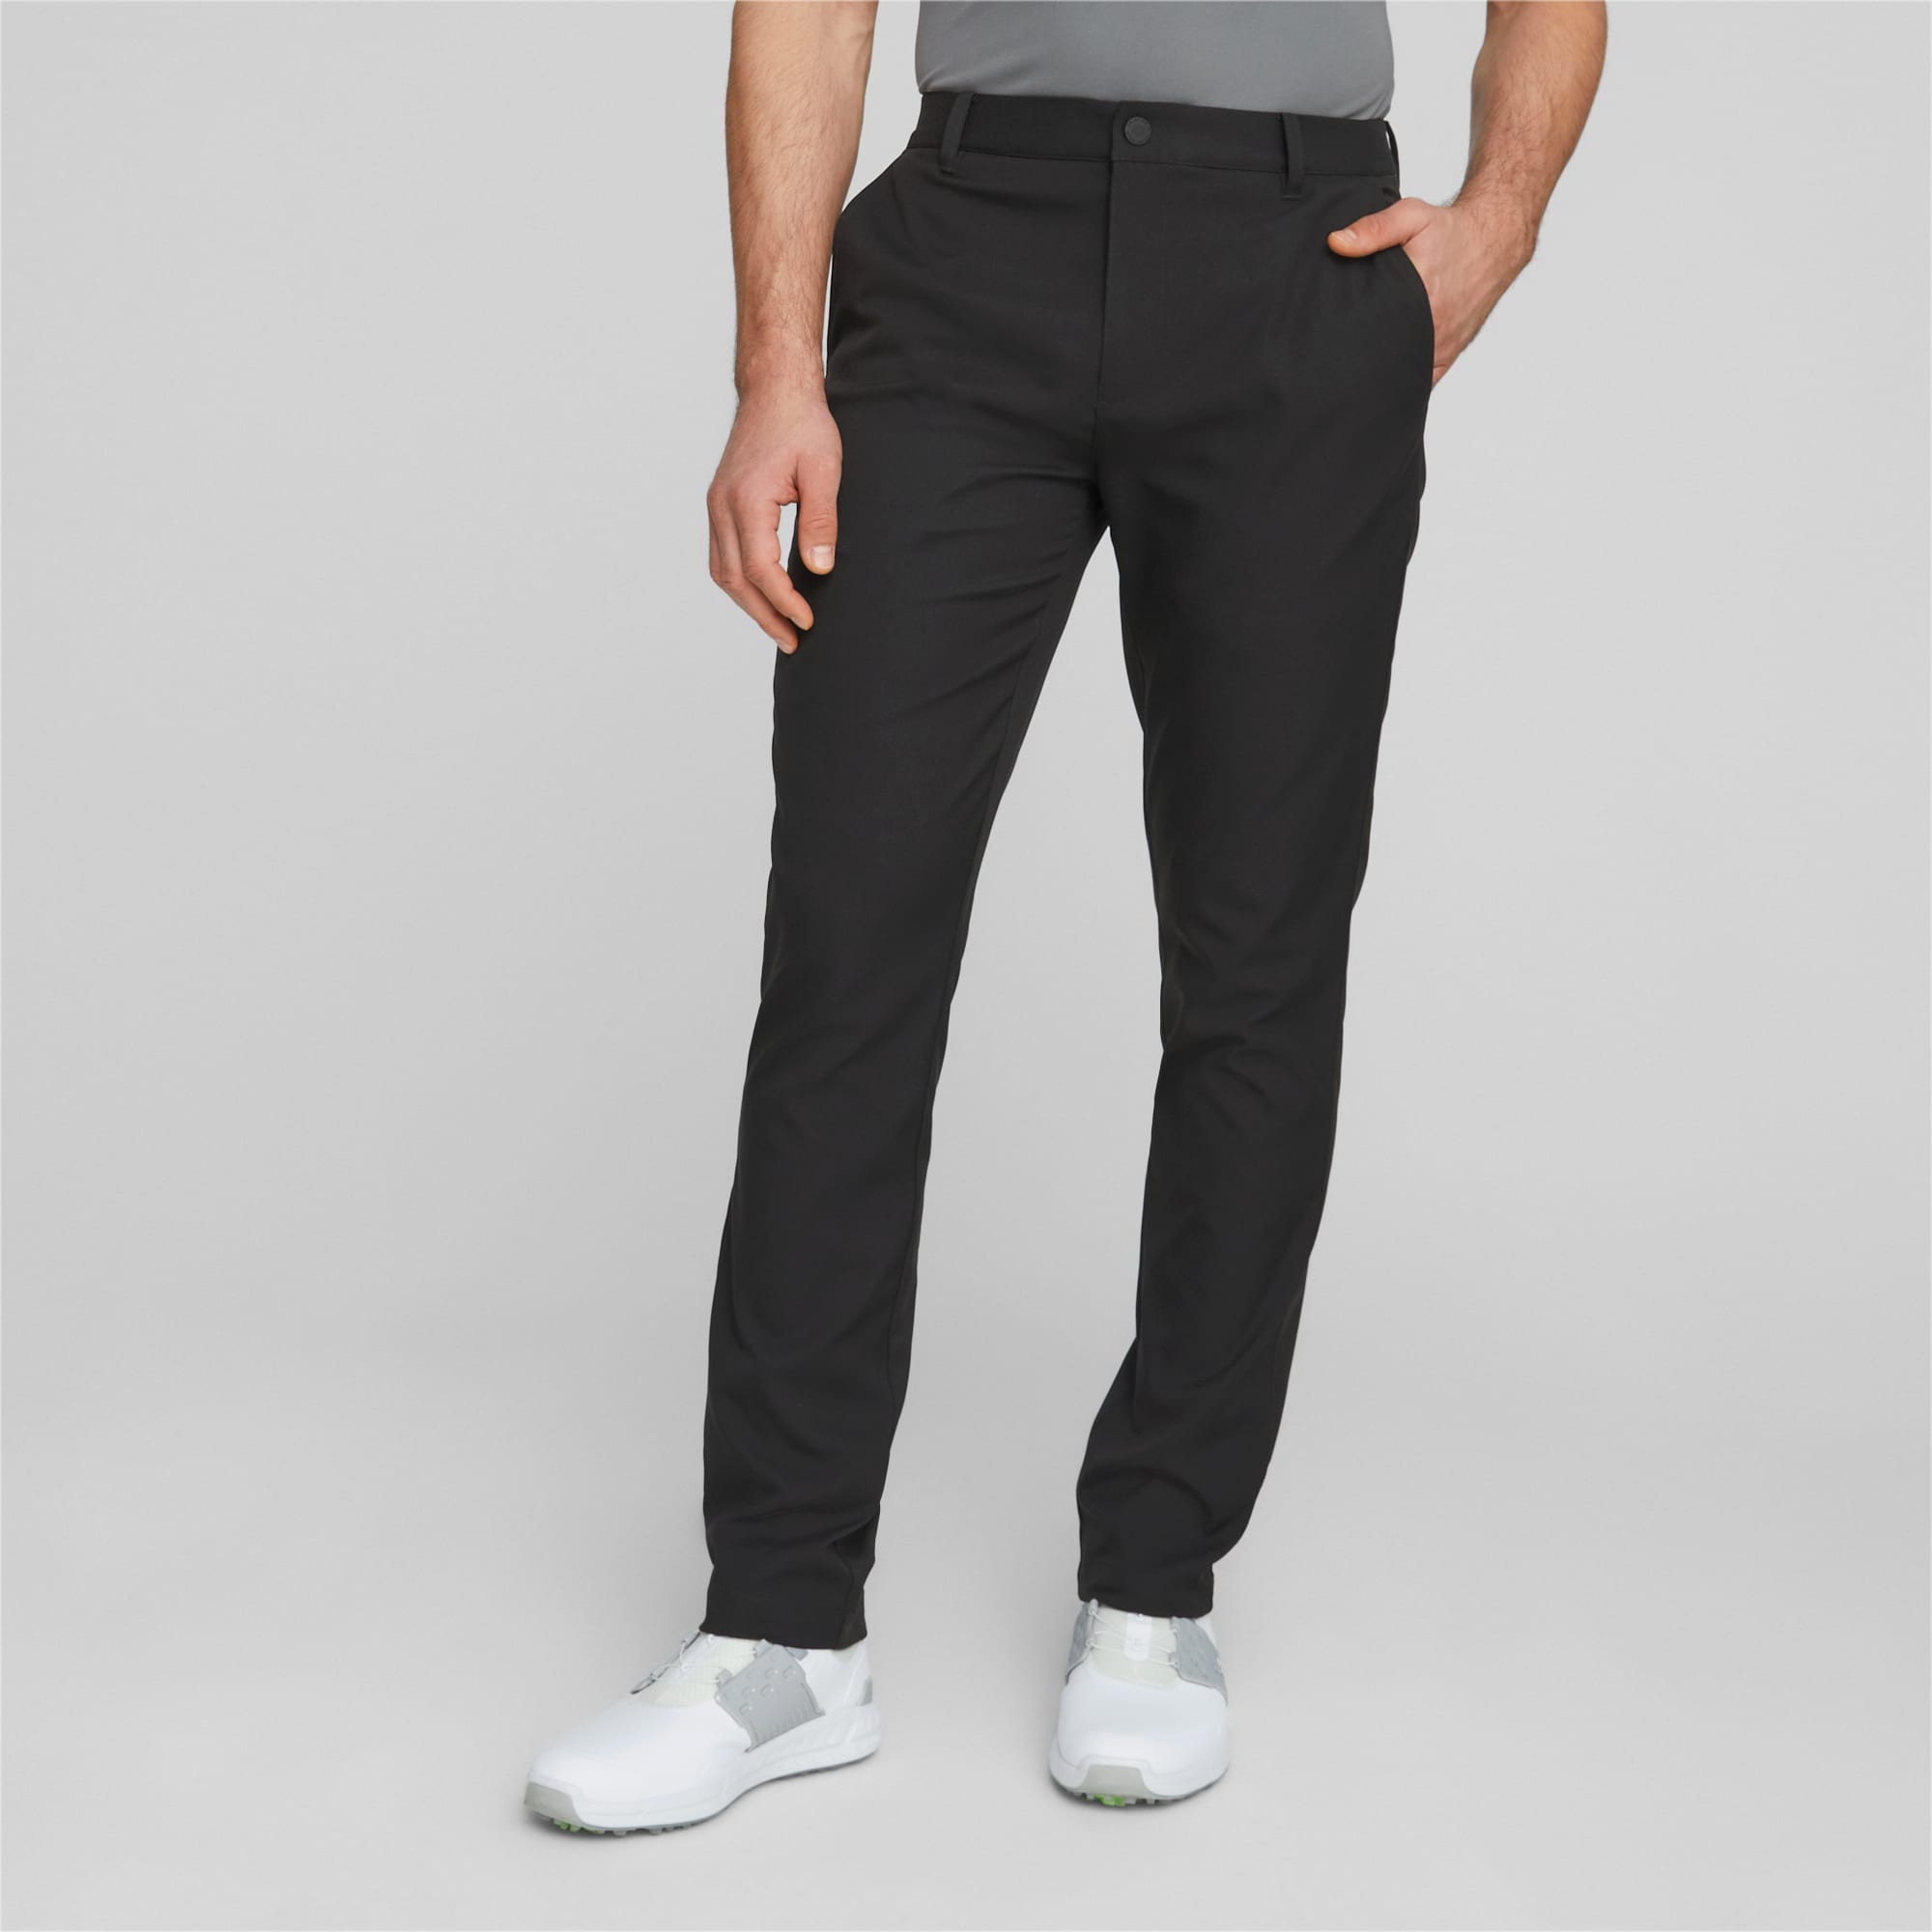 PUMA Dealer Tailored Golf Pants Men, Black